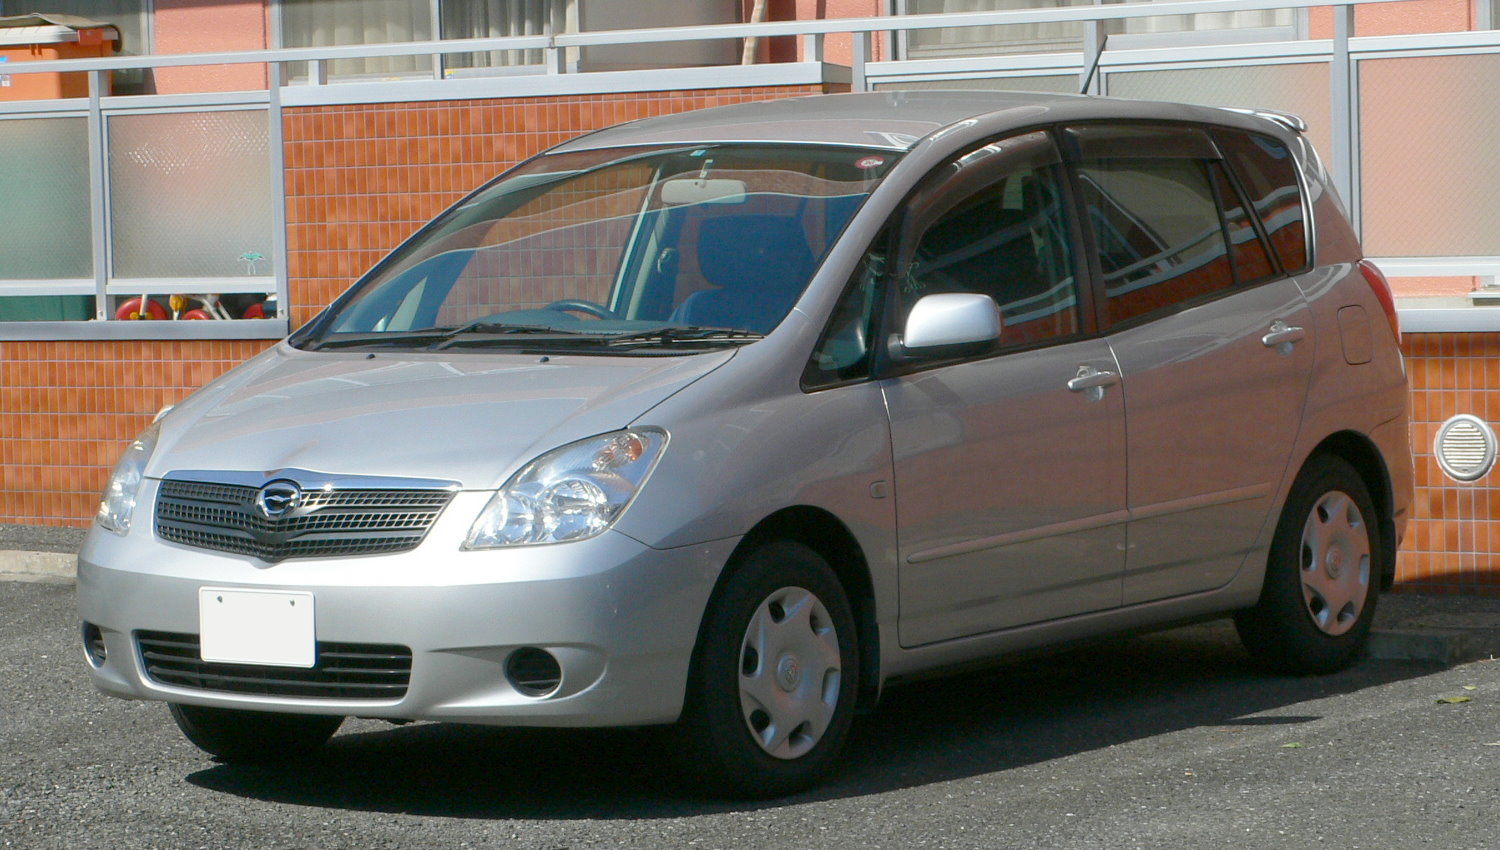 Toyota Corolla Spacio - Wikipedia